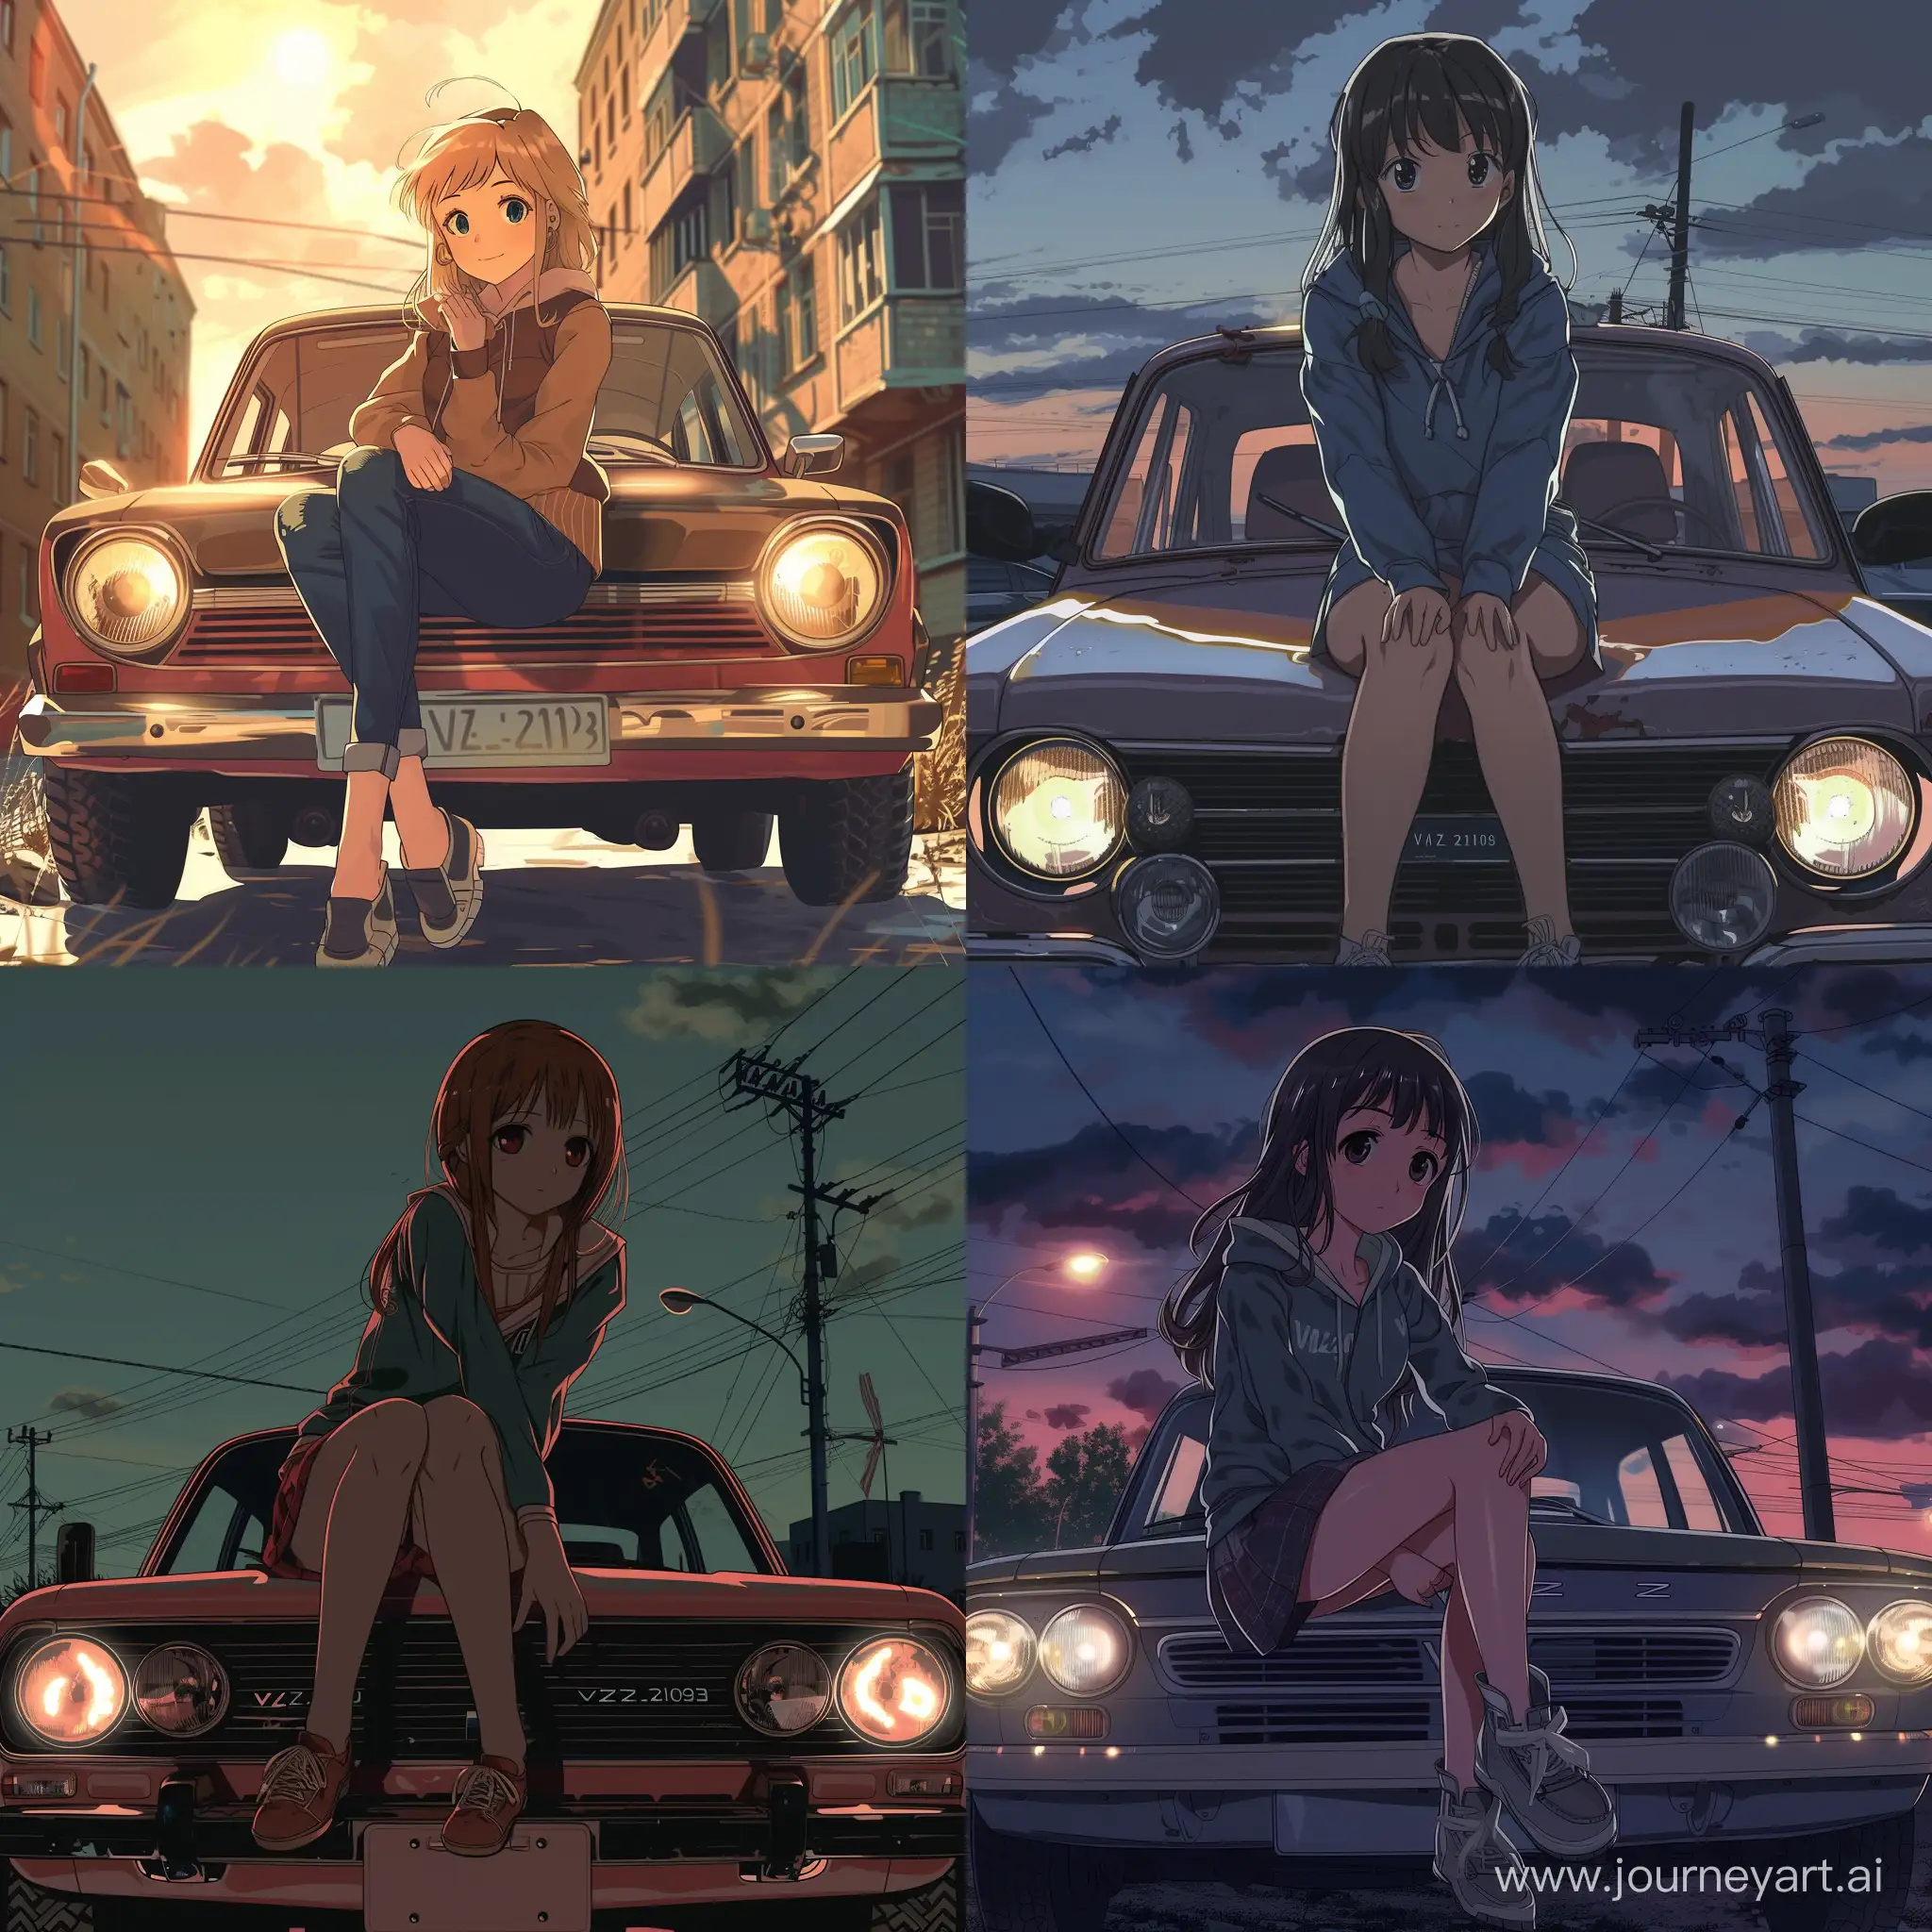 Anime-Girl-Sitting-on-VAZ2103-Car-Hood-in-Soviet-Era-Anime-Style